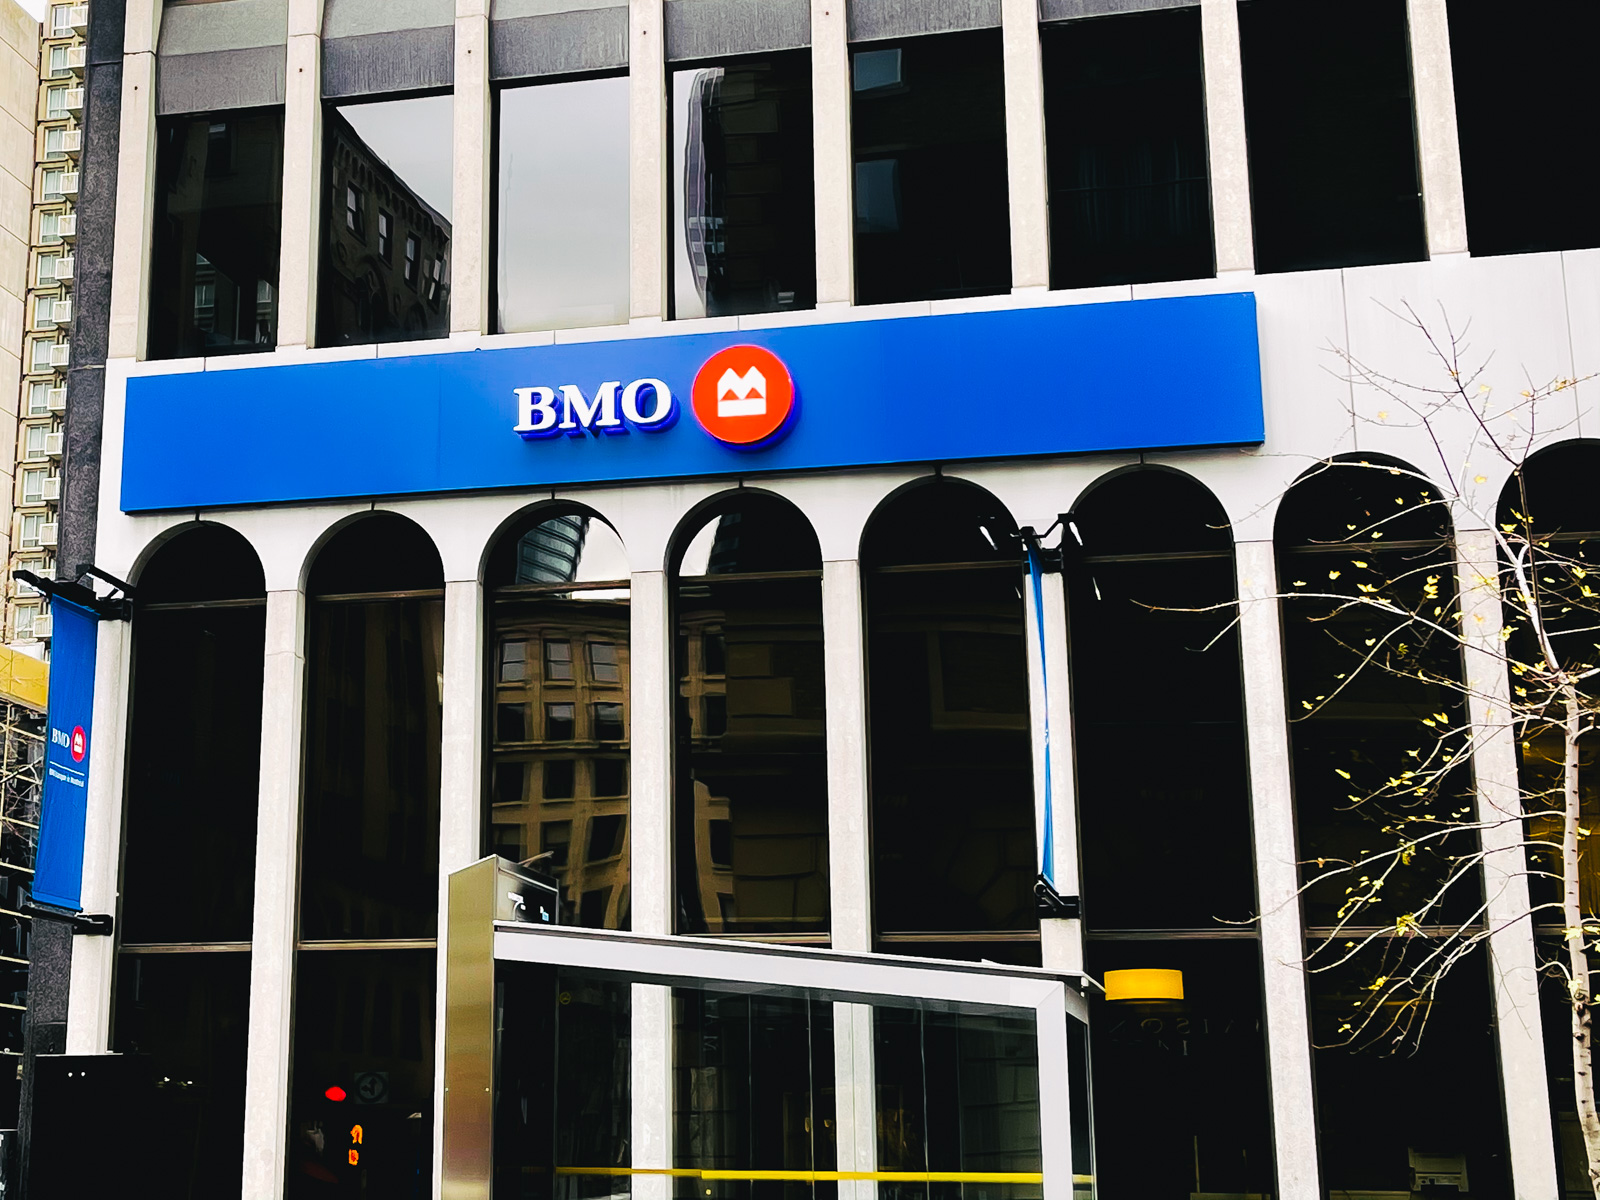 BMO Bank Accounts